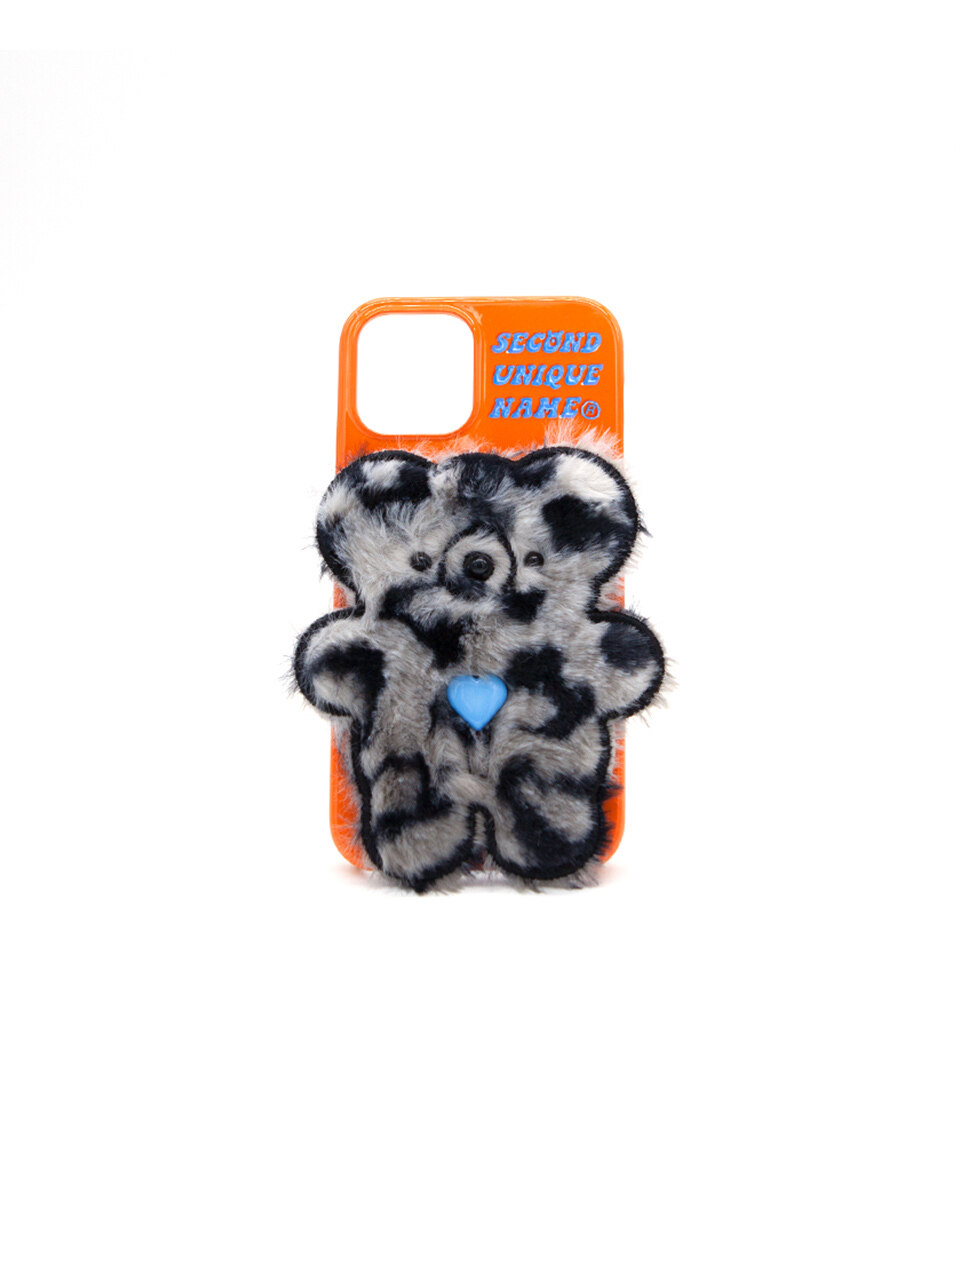 SECOND UNIQUE NAME [Orange] Furry Bear Leopard IPhone Case